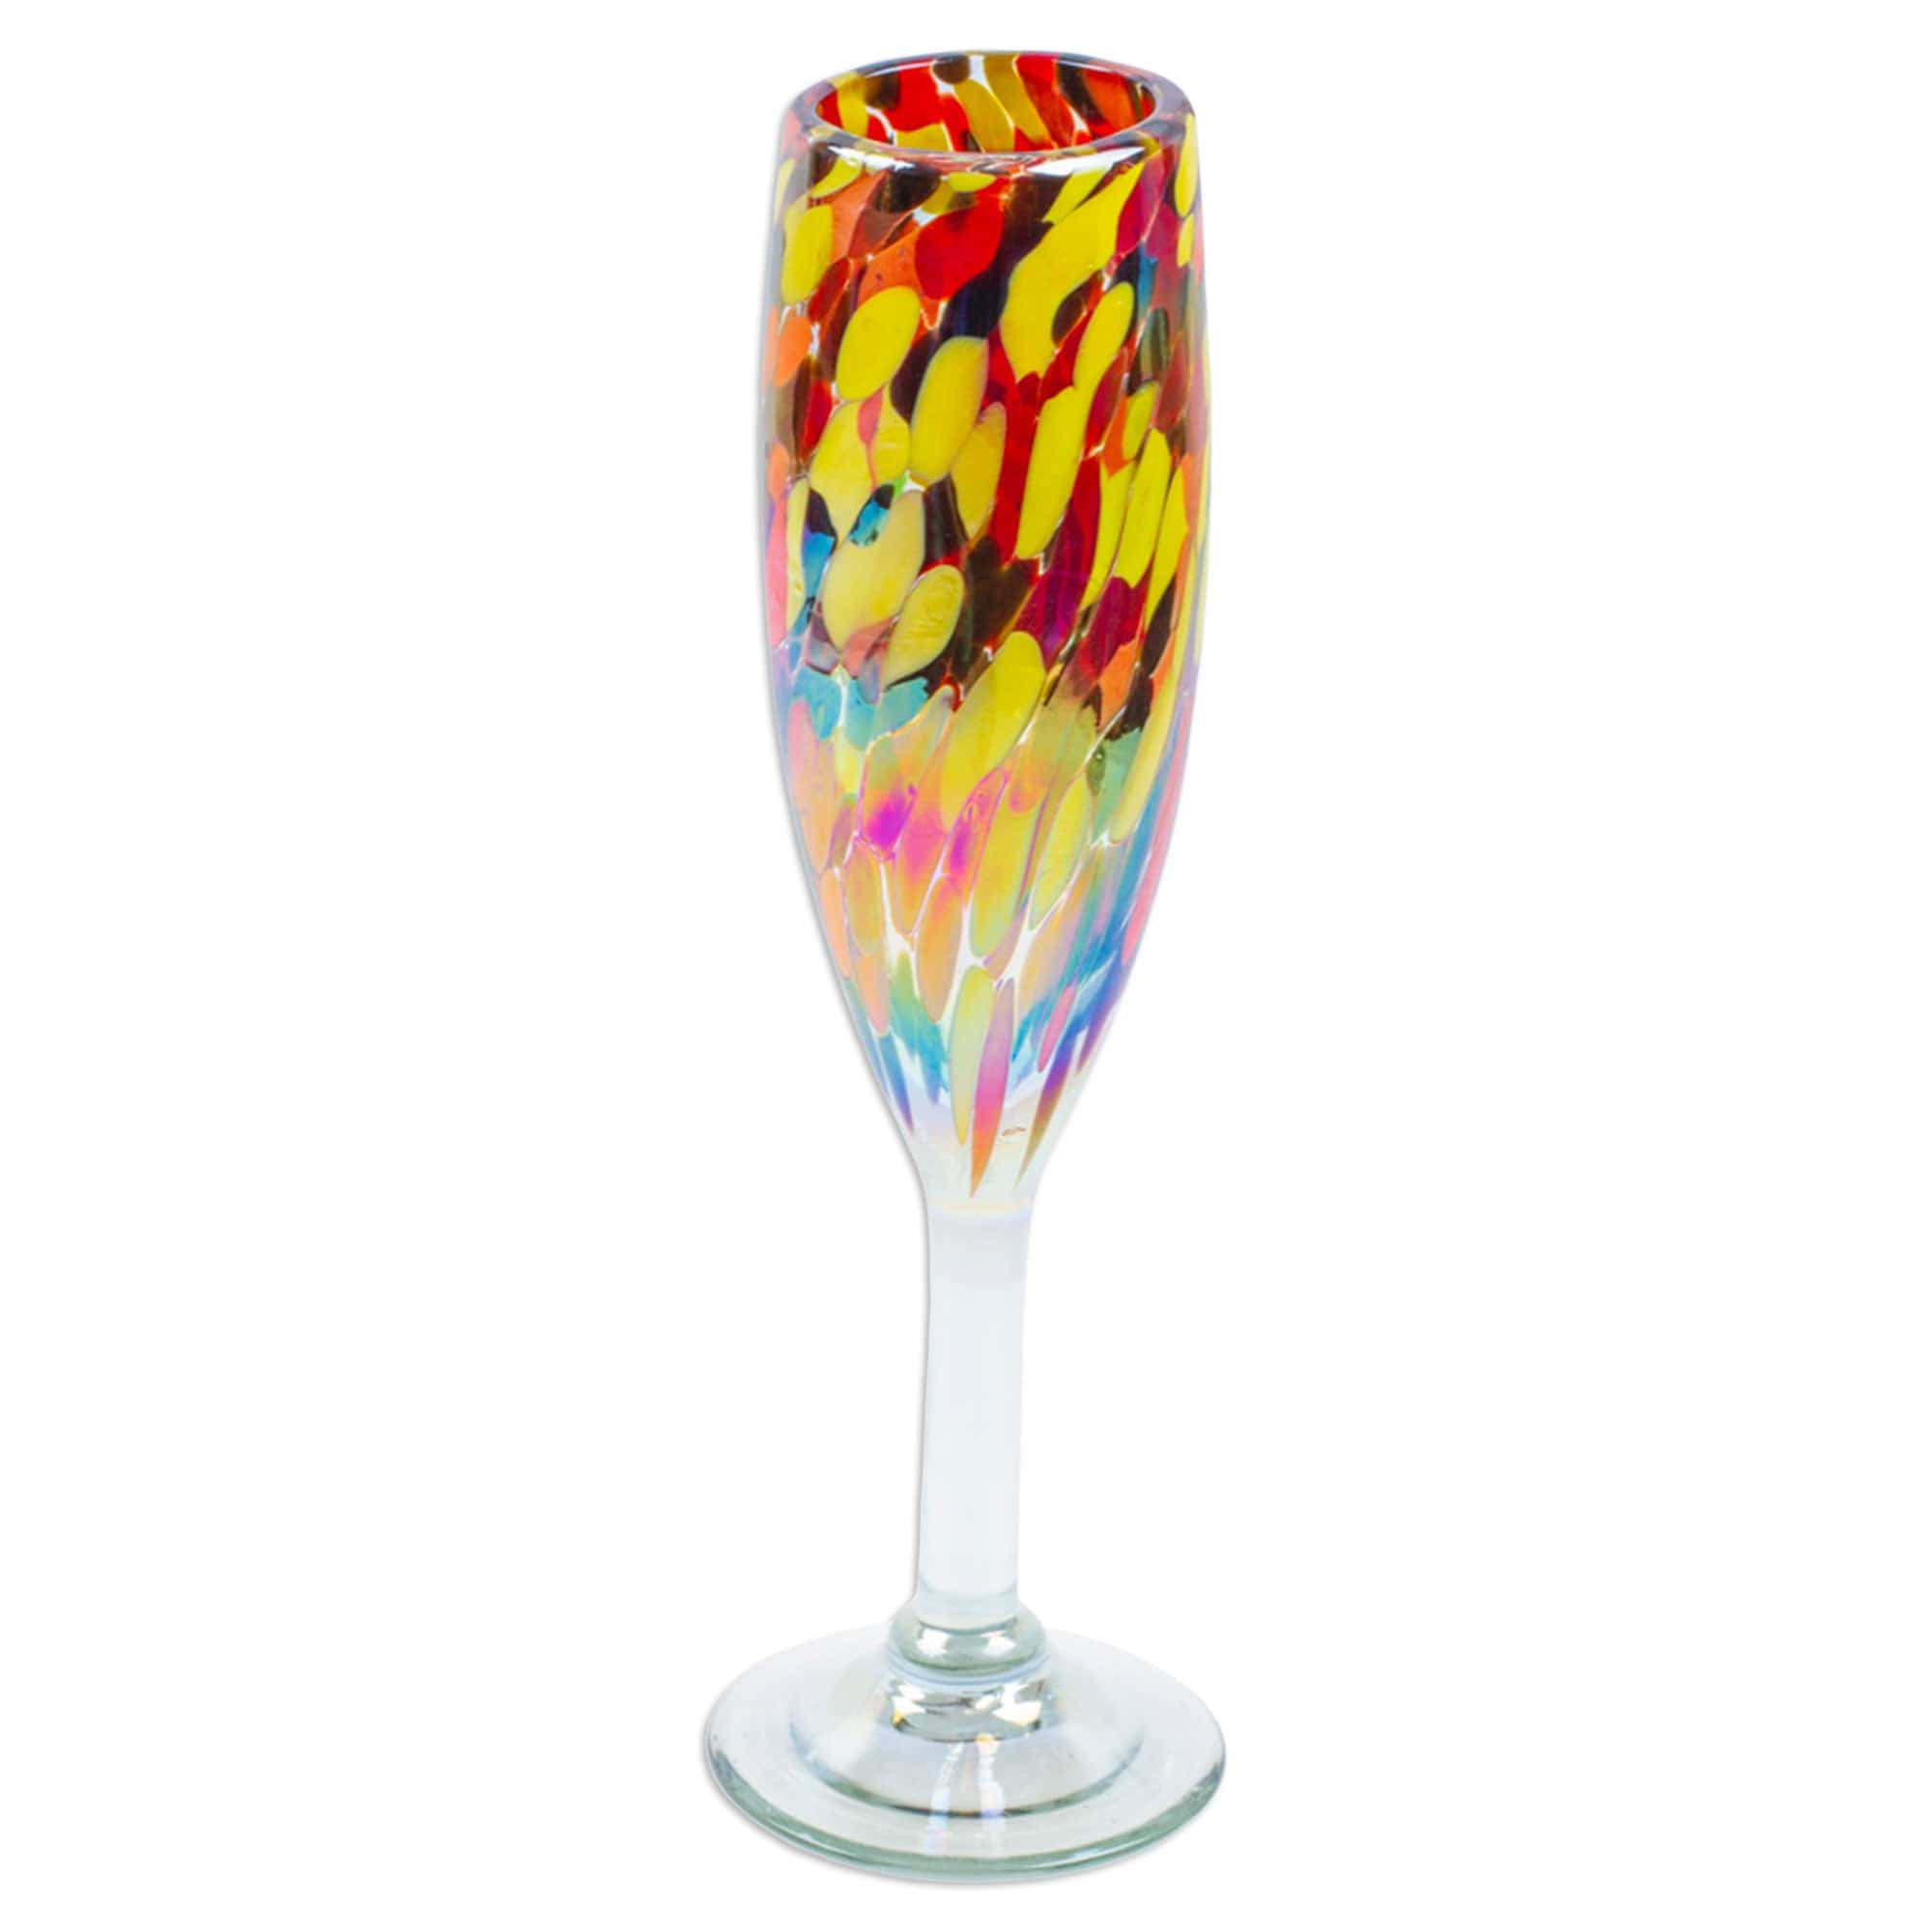 Vietri Rainbow Jewel Tone Assorted Champagne Flutes - Set of 4